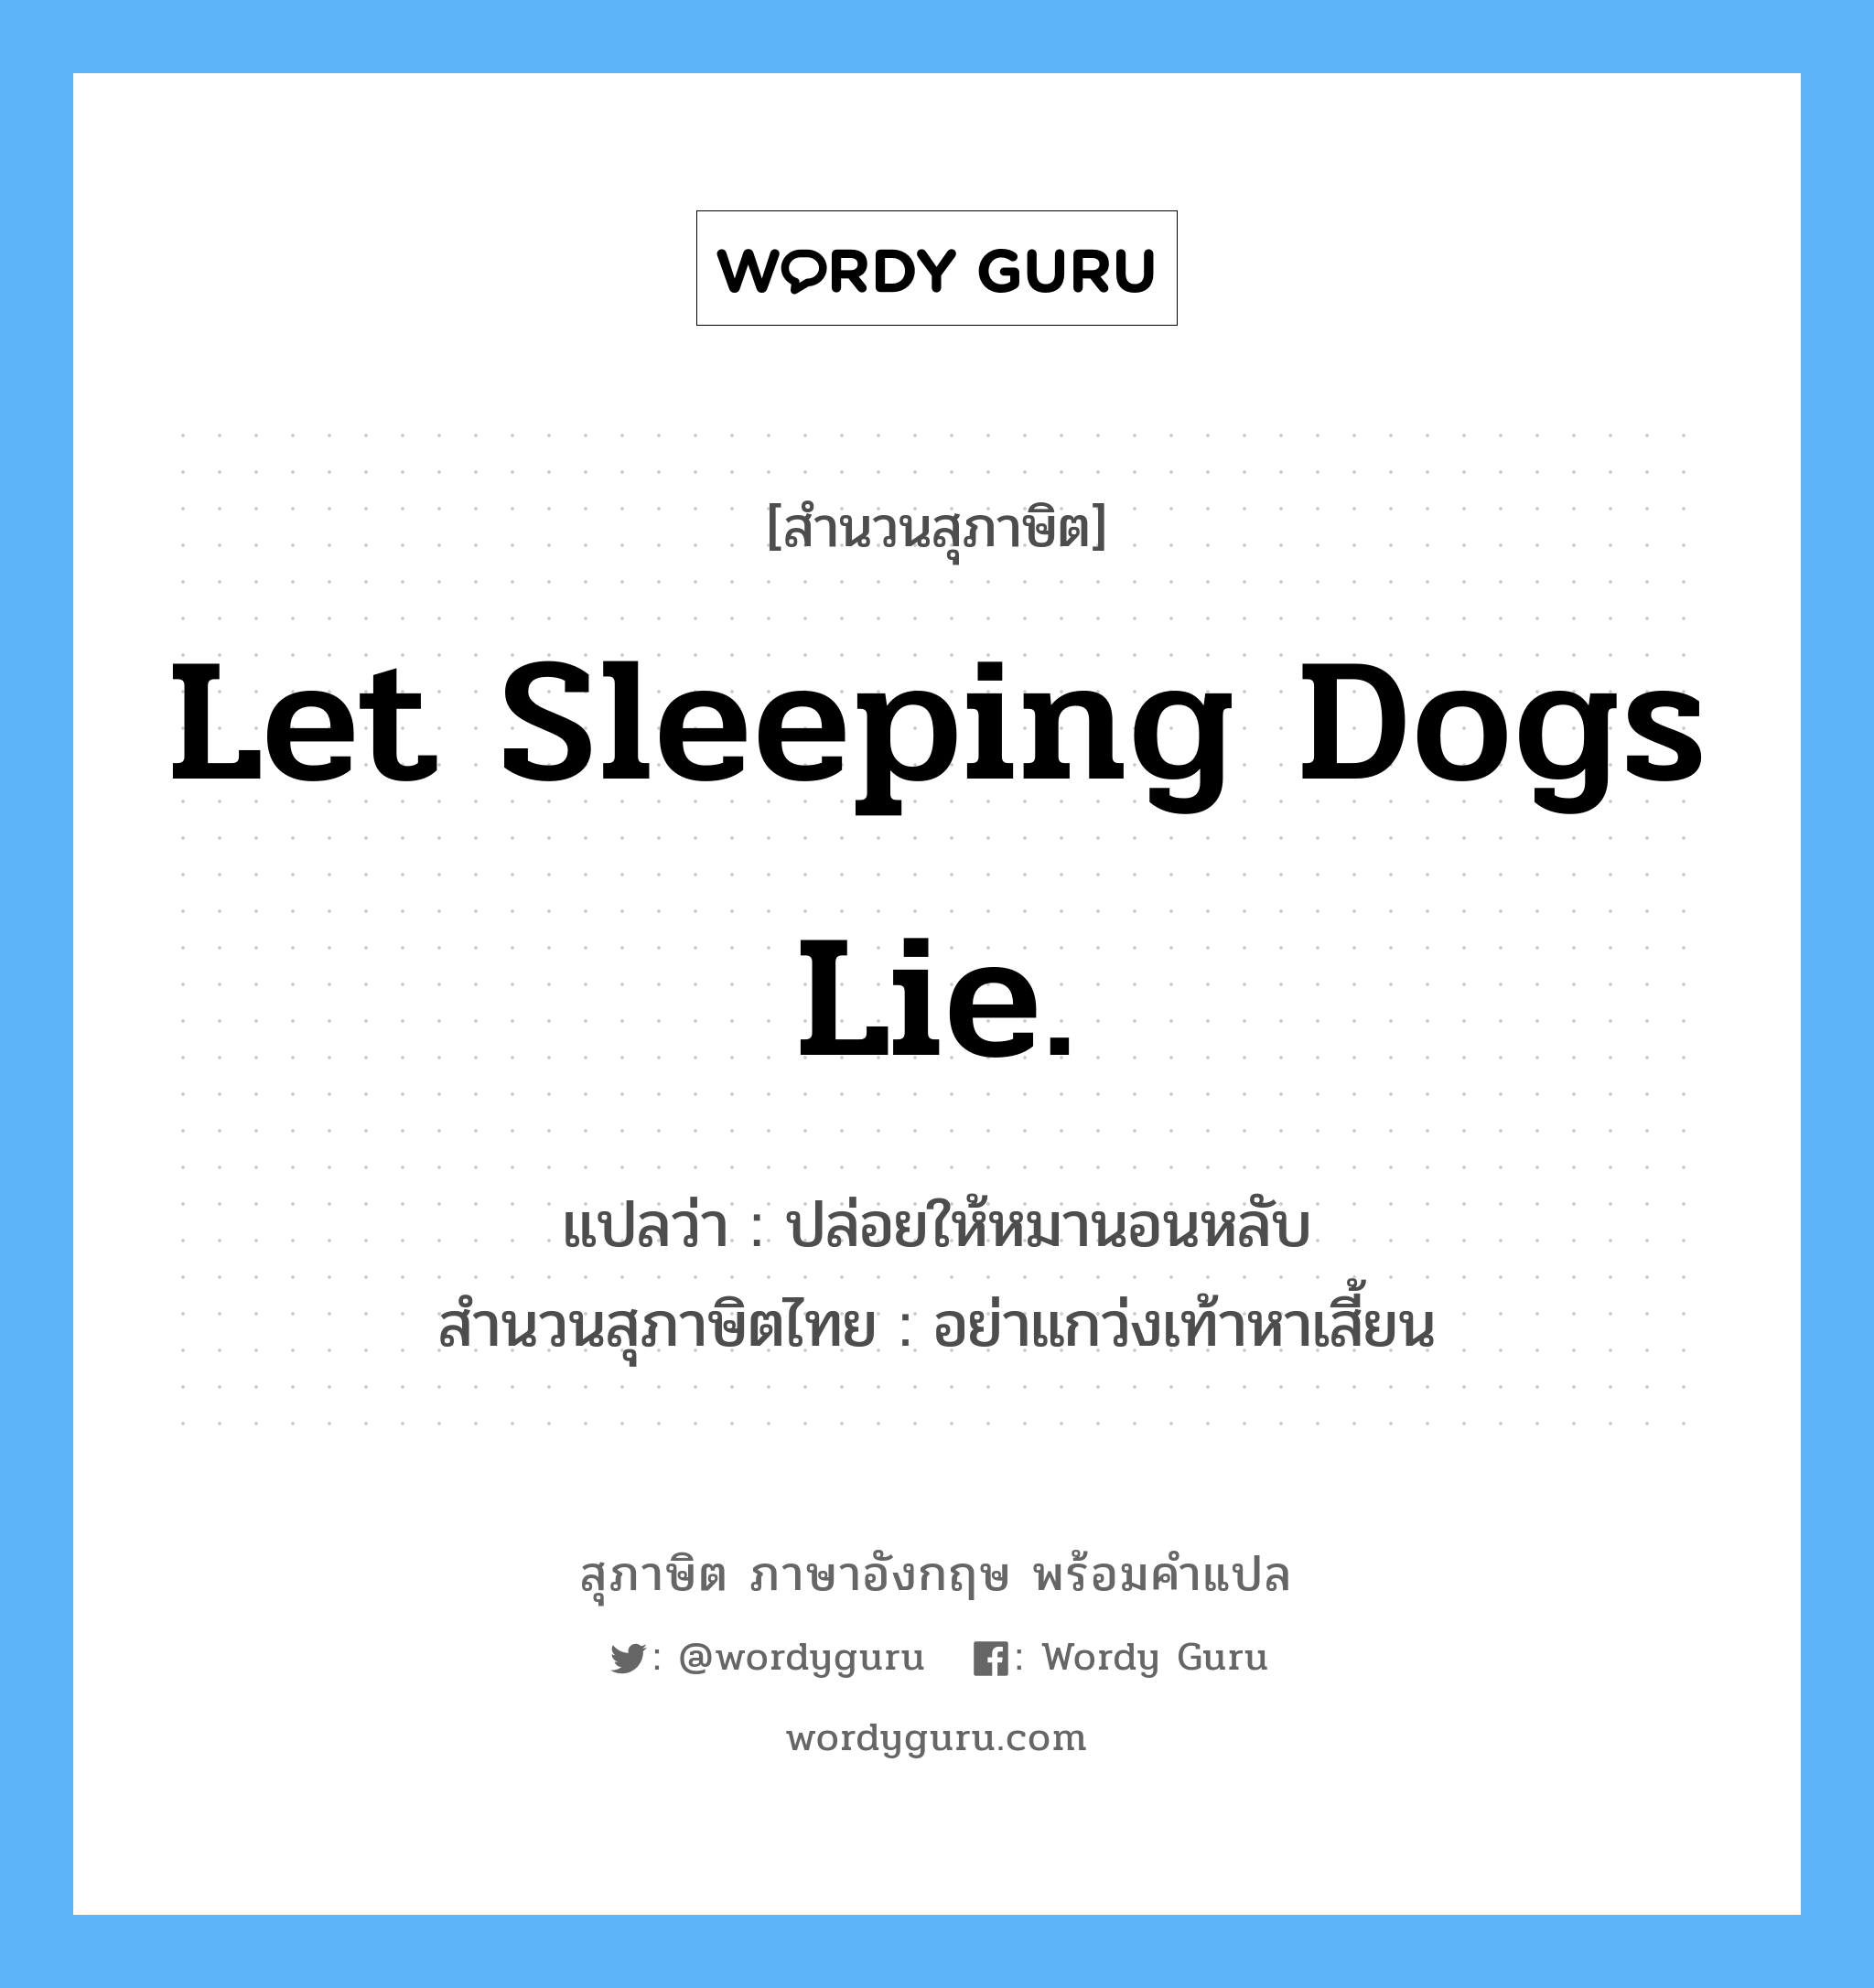 Let sleeping dogs lie.